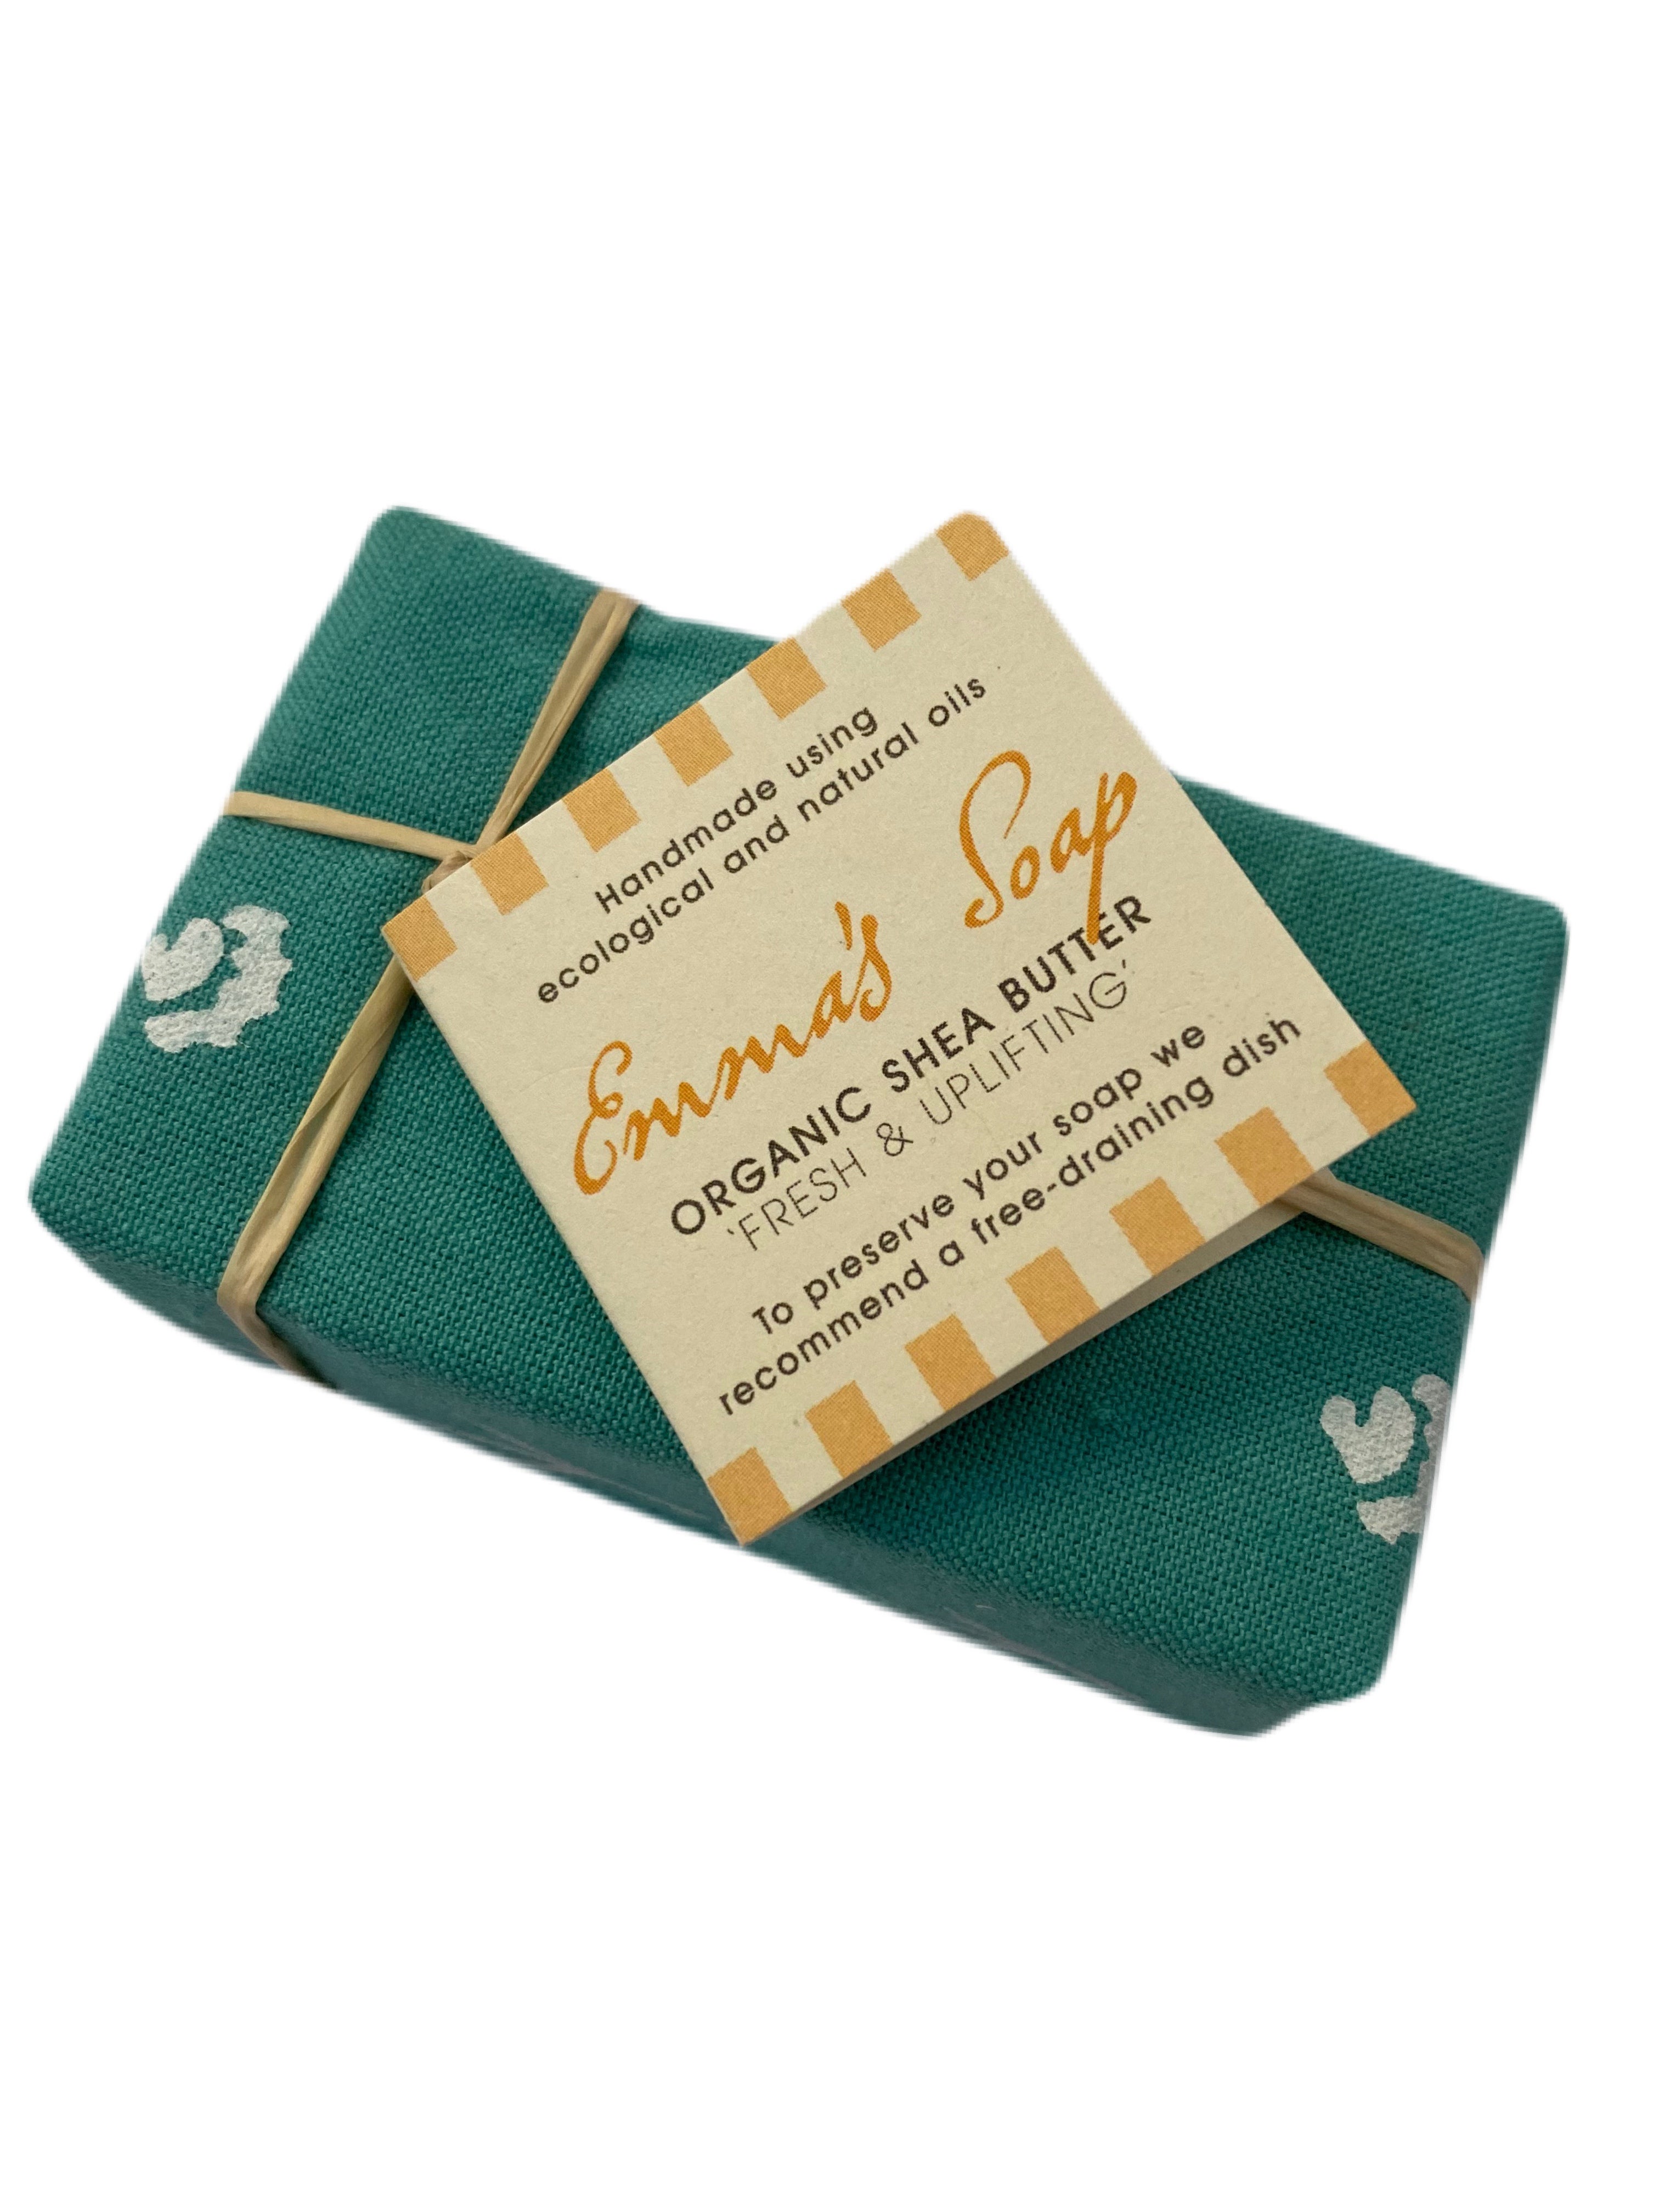 Emma's Soap - Organic Shea Butter Fresh & Uplifting Soap Bar - Kate's Cupboard